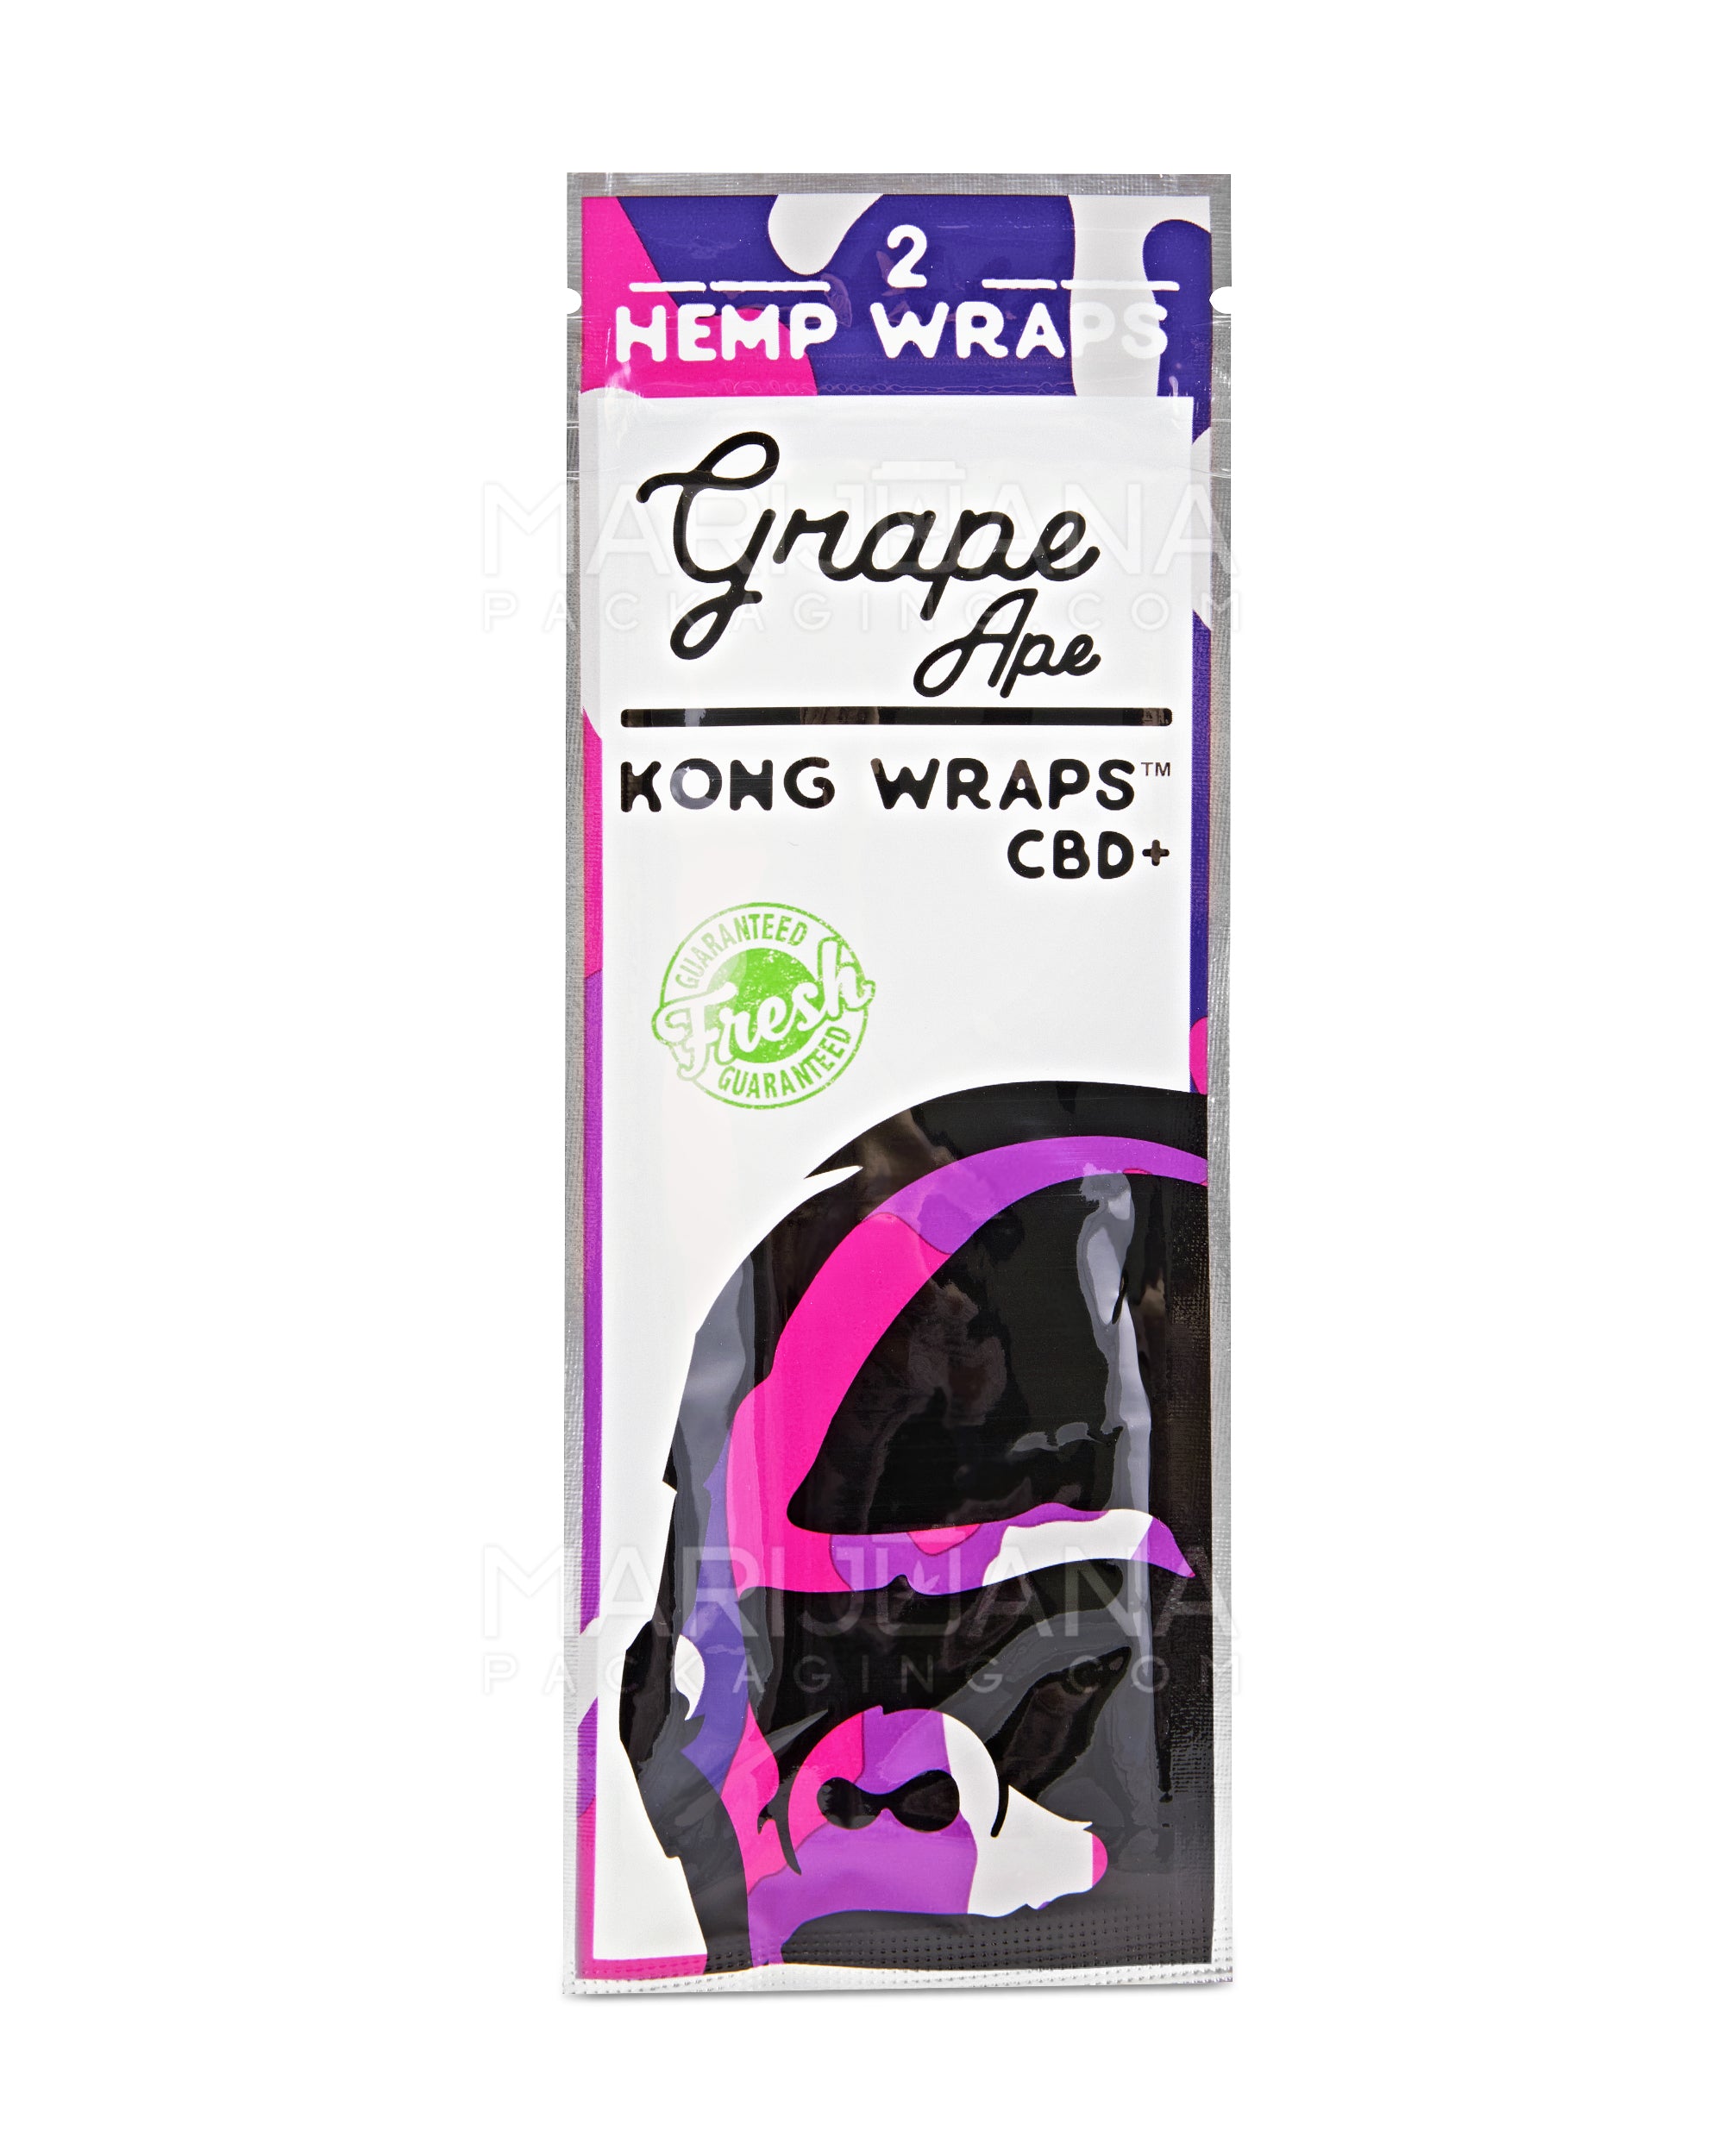 KONG WRAPS | 'Retail Display' Organic Hemp Blunt Wraps | CBD Infused - Grape Ape - 25 Count